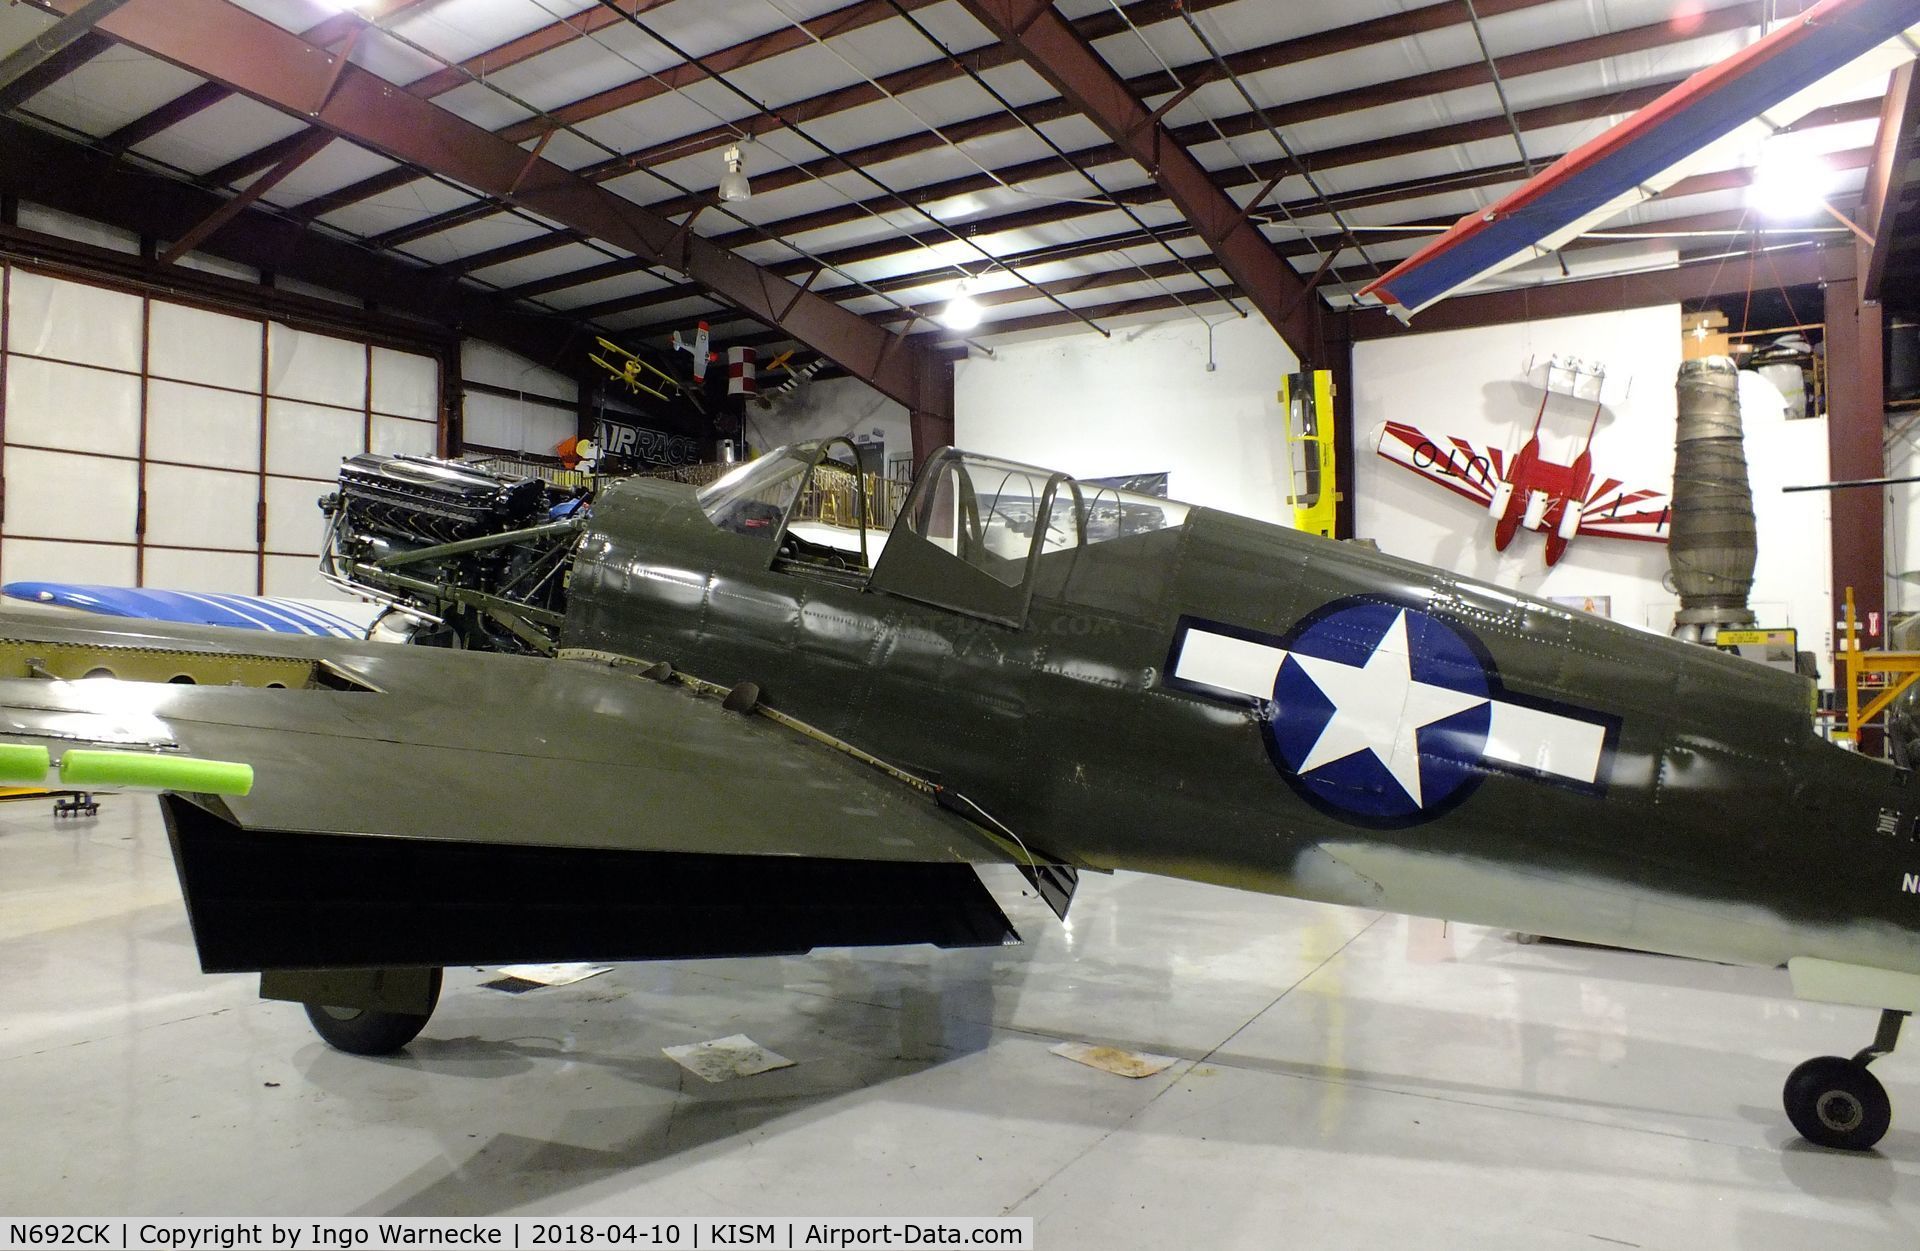 N692CK, 1945 Curtiss P-40N Warhawk C/N 692N, Curtiss P-40N Warhawk undergoing maintenance/restoration at the Kissimmee Air Museum, Orlando FL